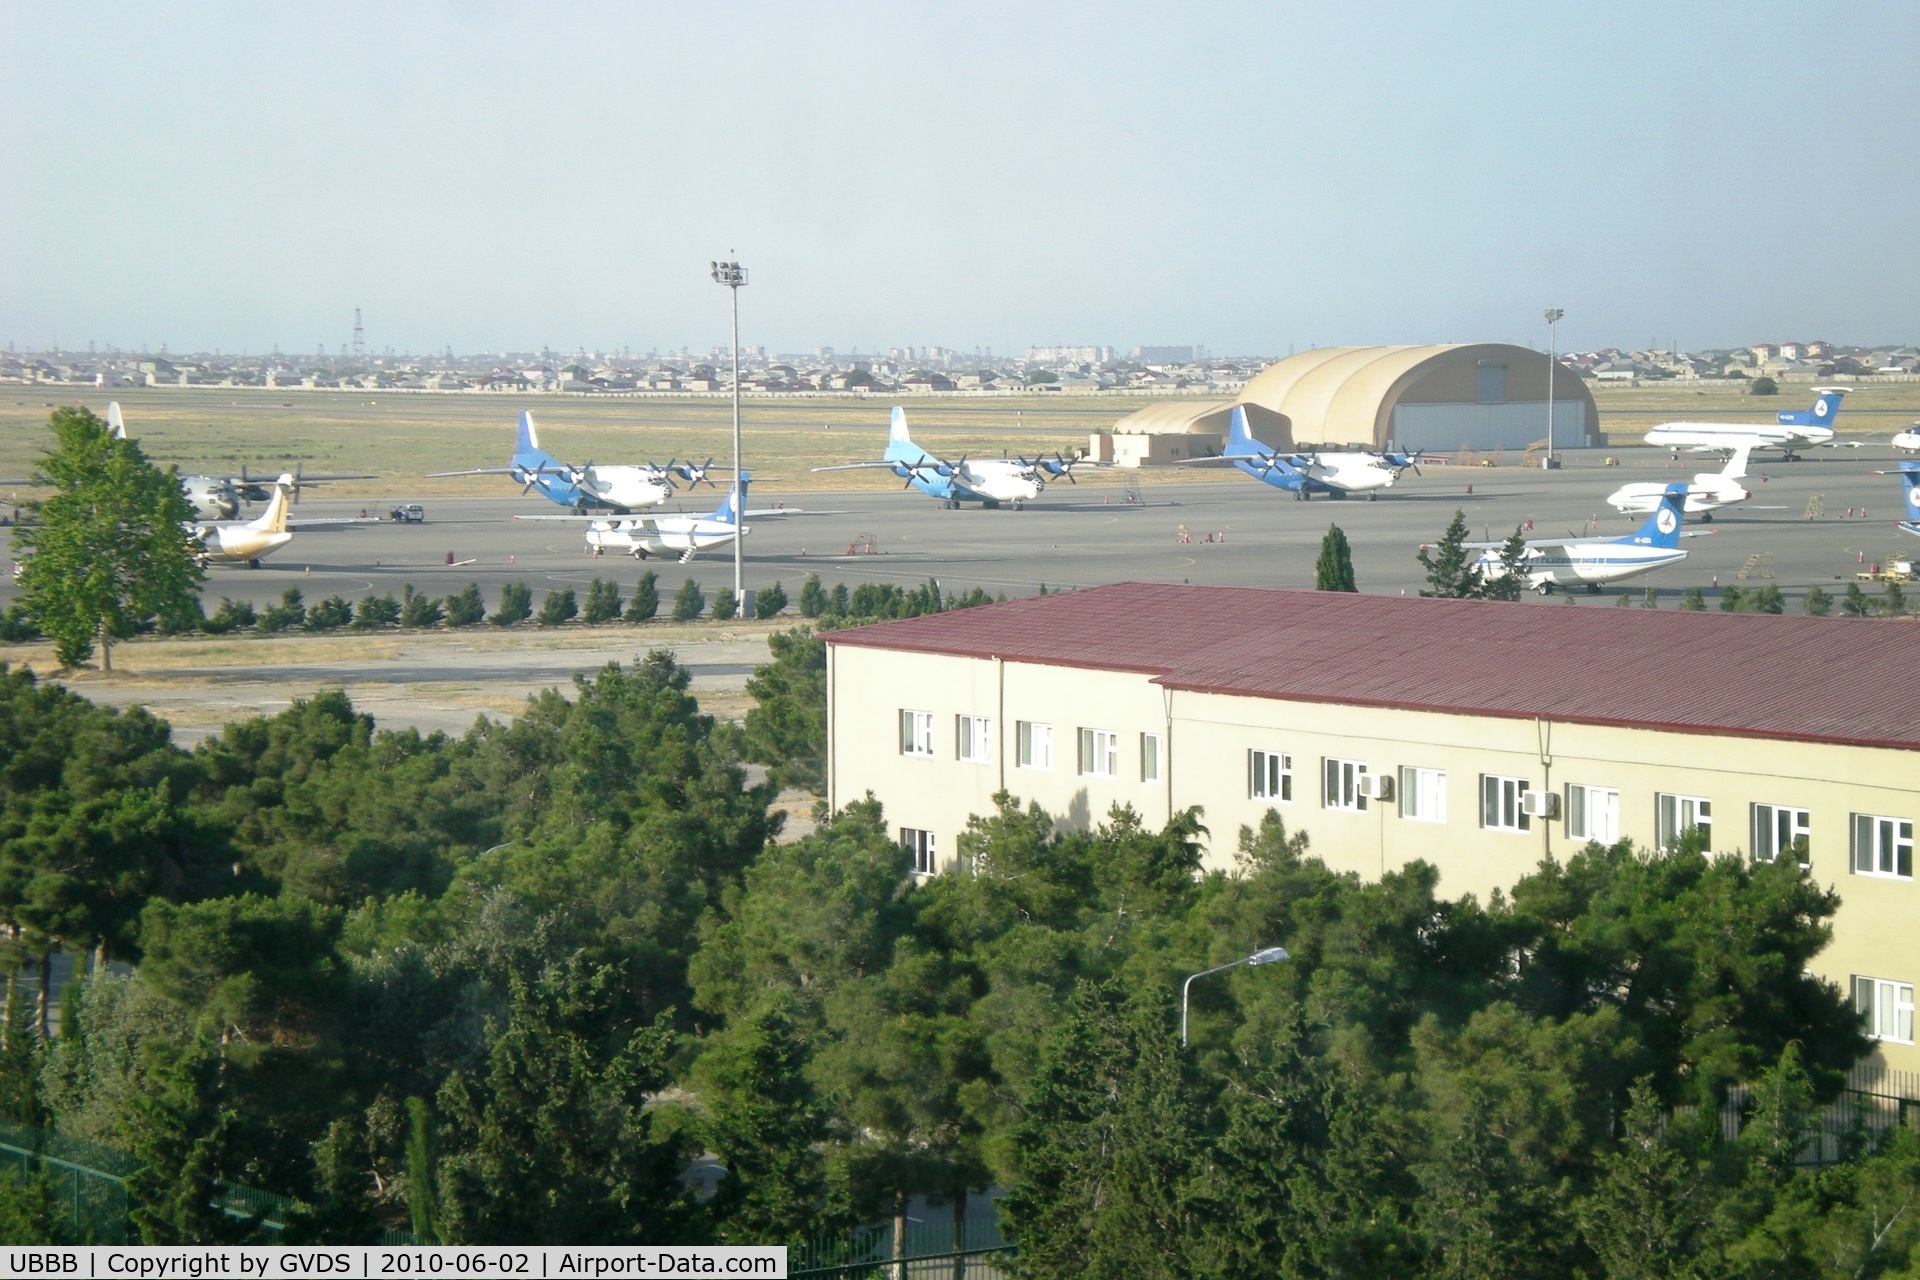 Heydar Aliyev International Airport, Baku Azerbaijan (UBBB) - Fligtline